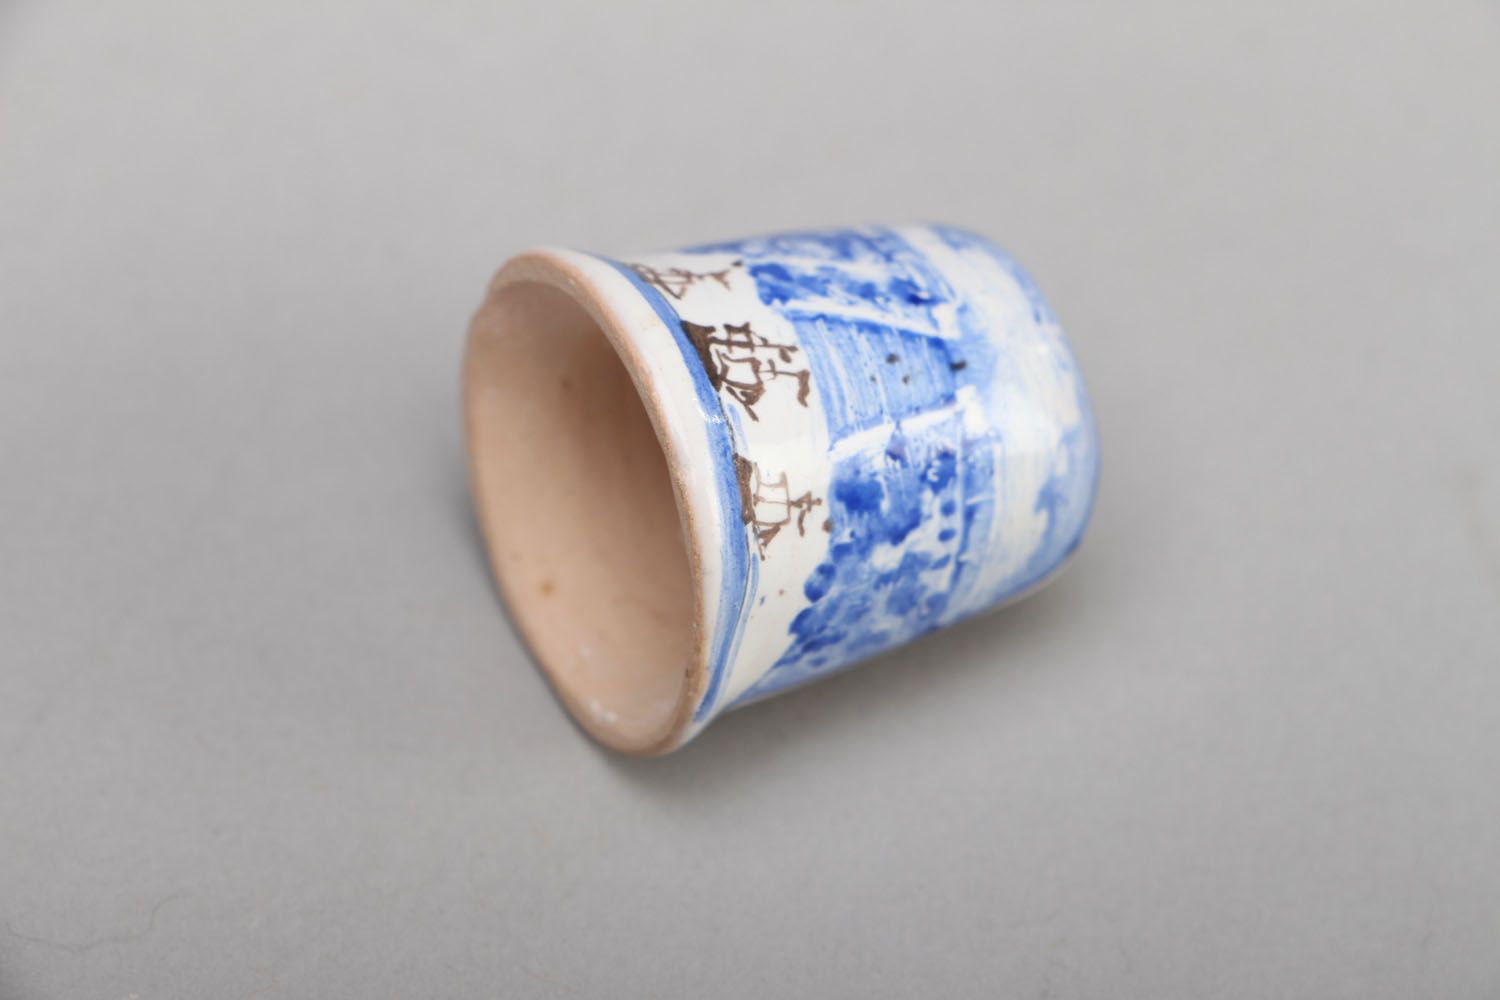 Decorative ceramic thimble photo 3